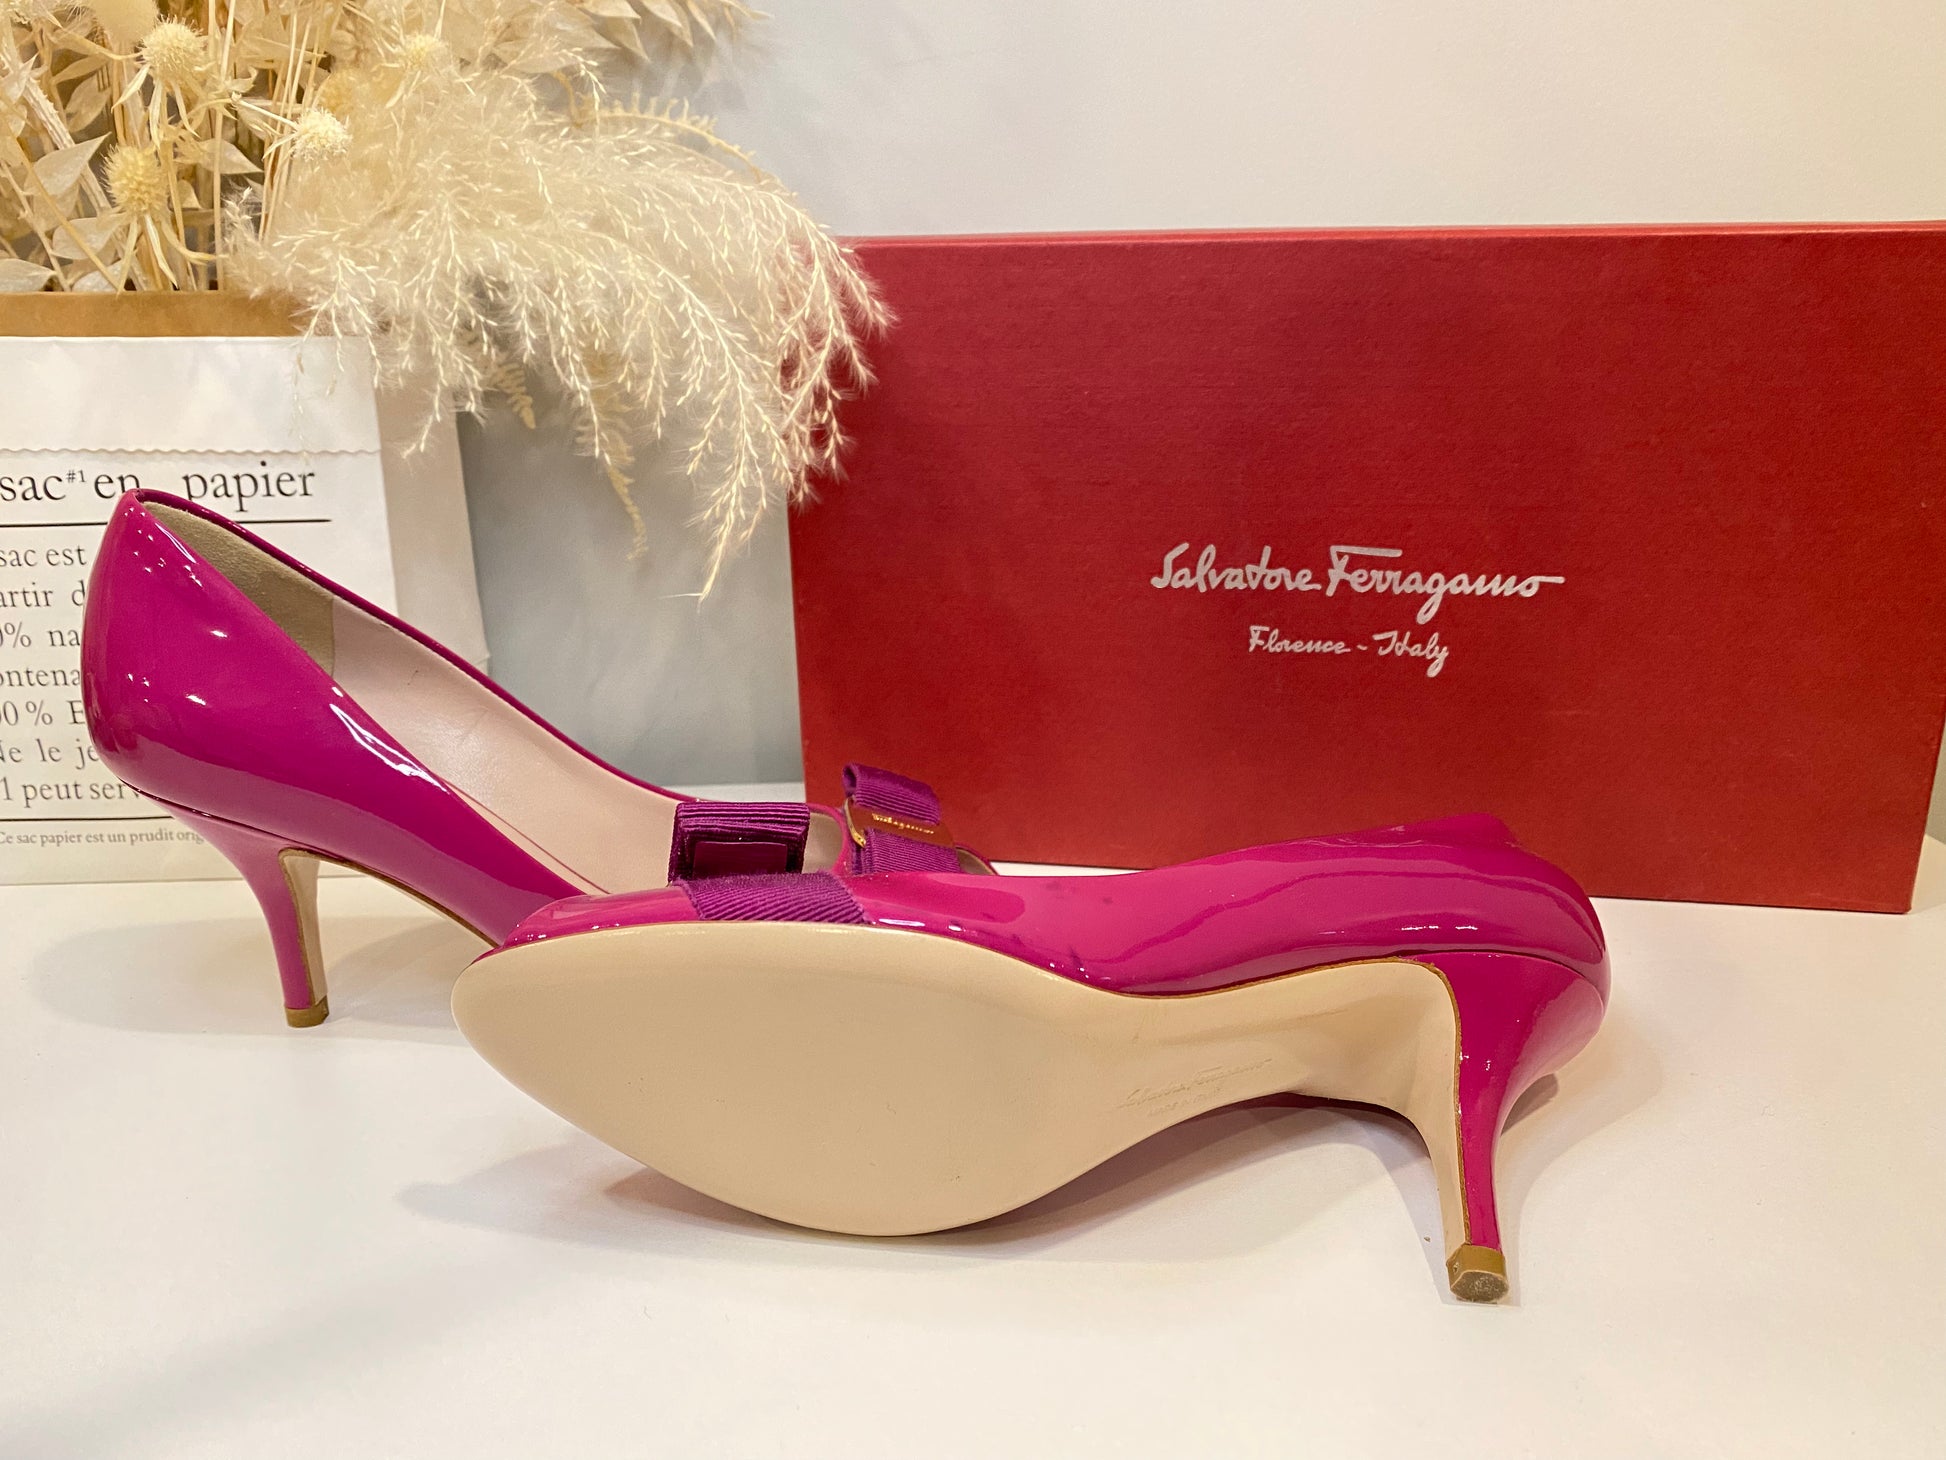 Salvatore Ferragamo Leather Heels In Pink - luxhub.ca